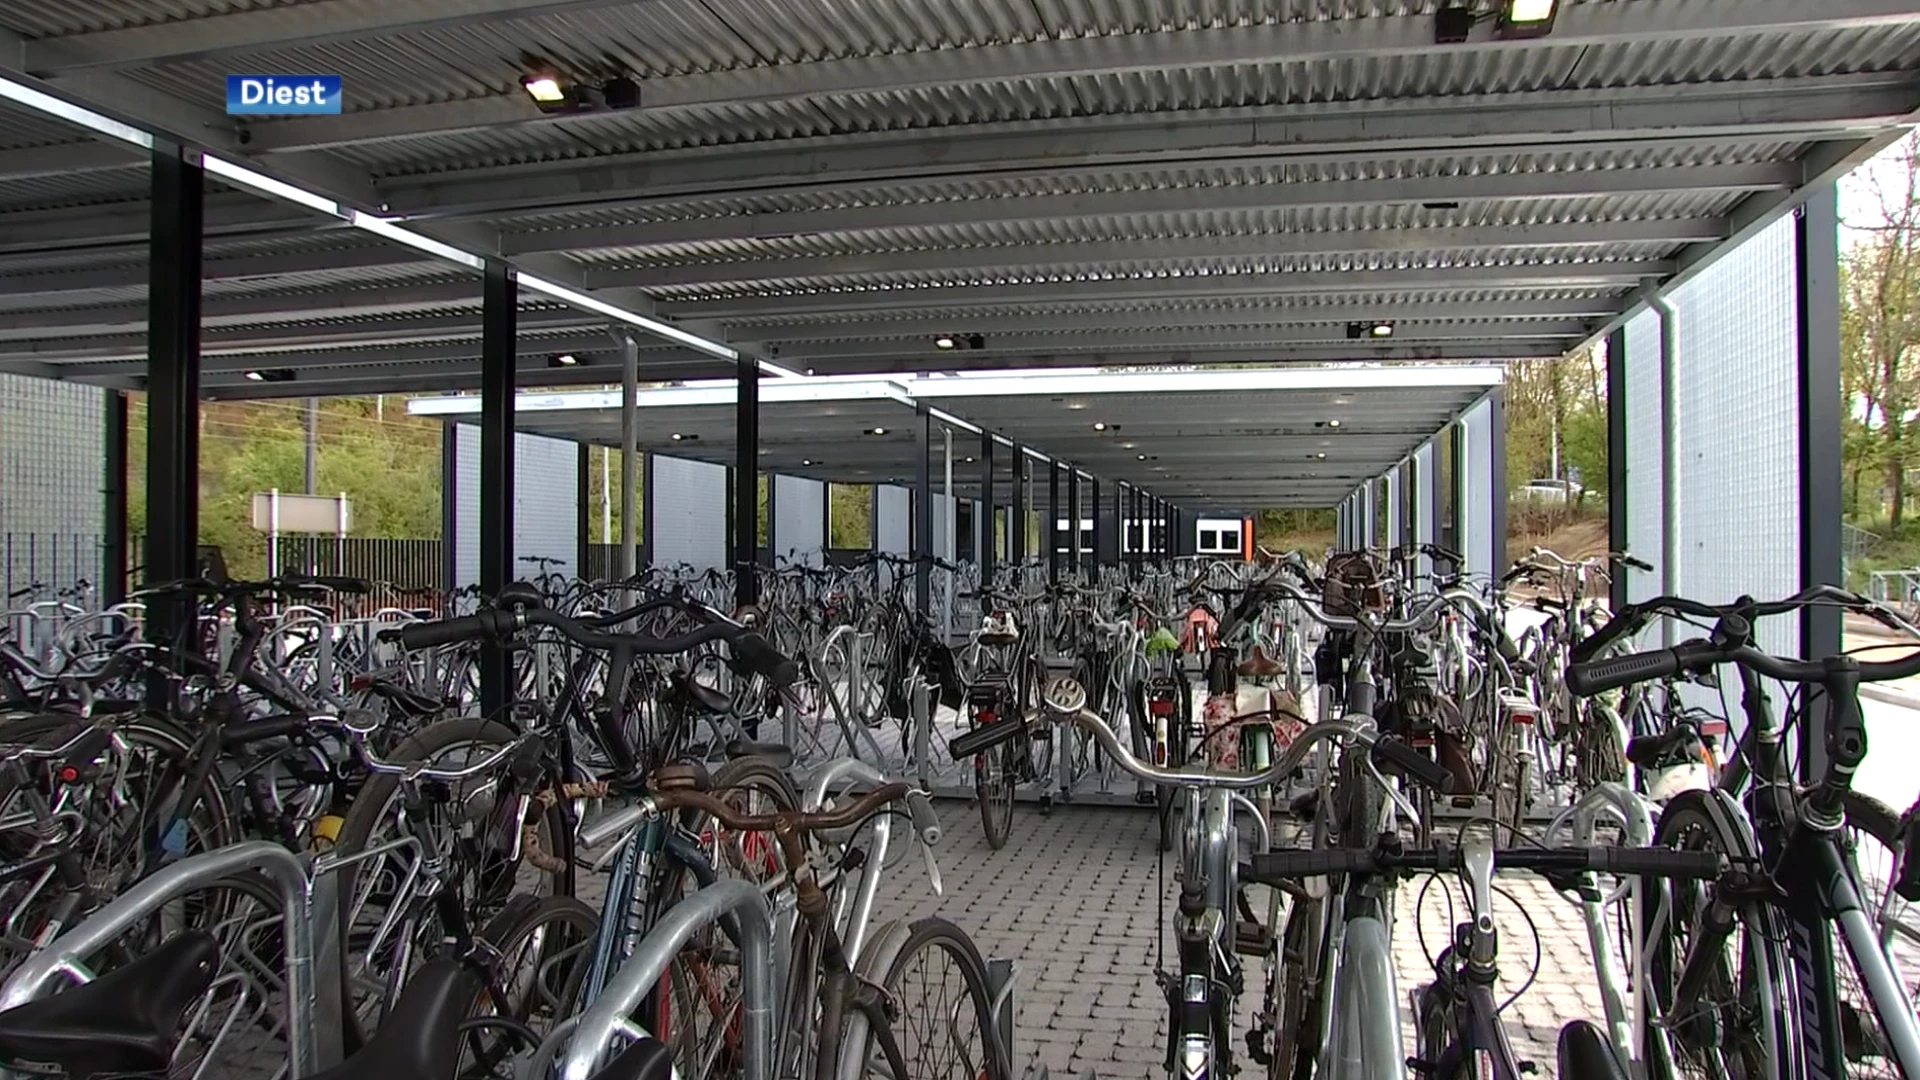 Overdekte fietsenstalling aan het station in Diest is klaar